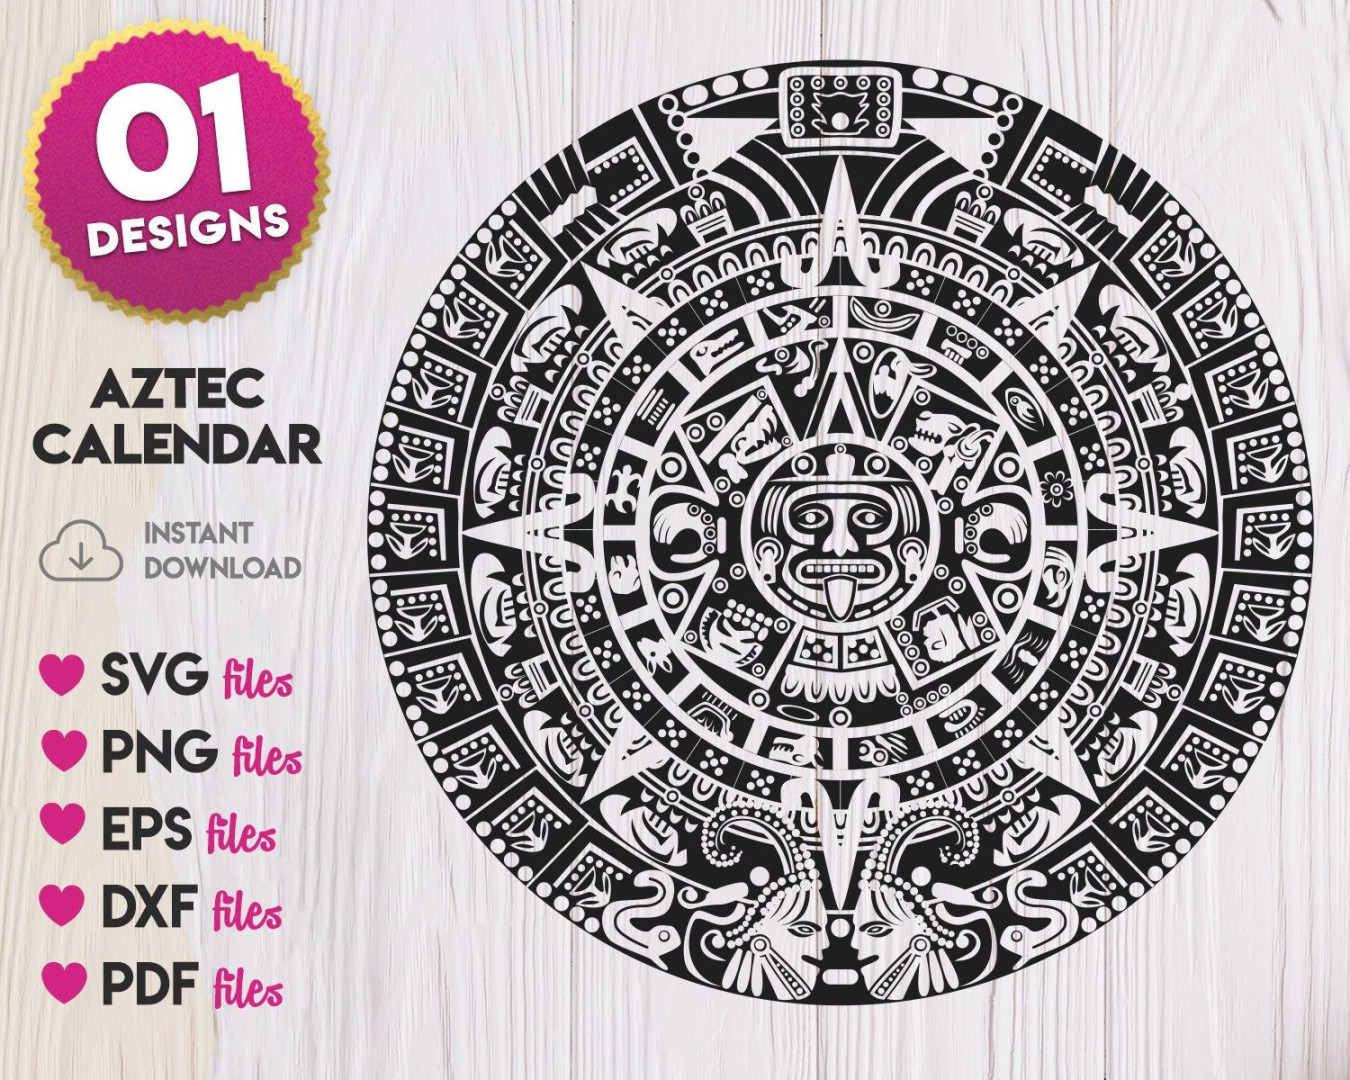 Aztec Calendar SVG Desing - Etsy  Aztec calendar, Invitation